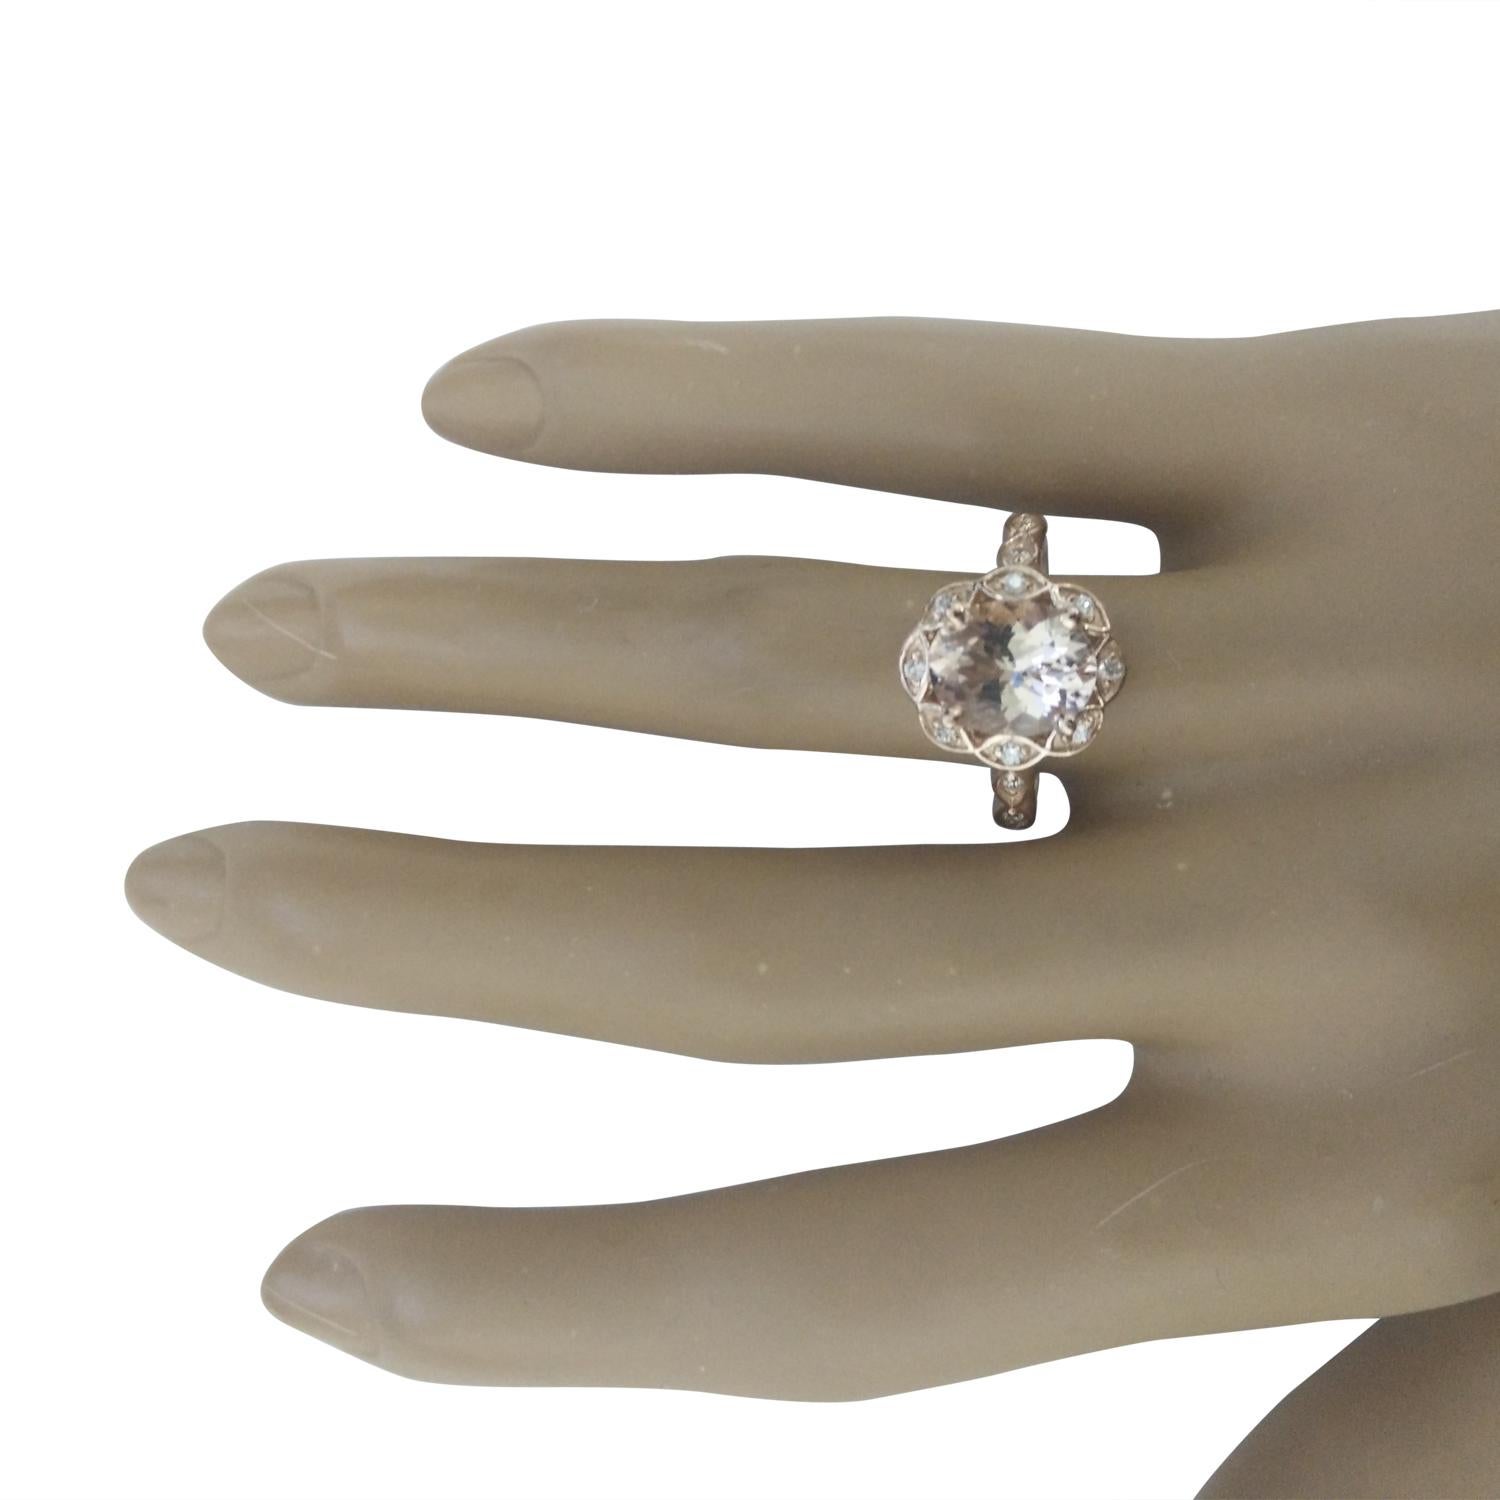 2.77 Carat Natural Morganite 14 Karat Solid Rose Gold Diamond Ring
Stamped: 14K
Total Ring Weight: 4.8 Grams 
Morganite Weight: 2.52 Carat (10.00x8.00 Millimeters)  
Diamond Weight: 0.25 Carat (F-G Color, VS2-SI1 Clarity)
Quantity: 12
Face Measures: